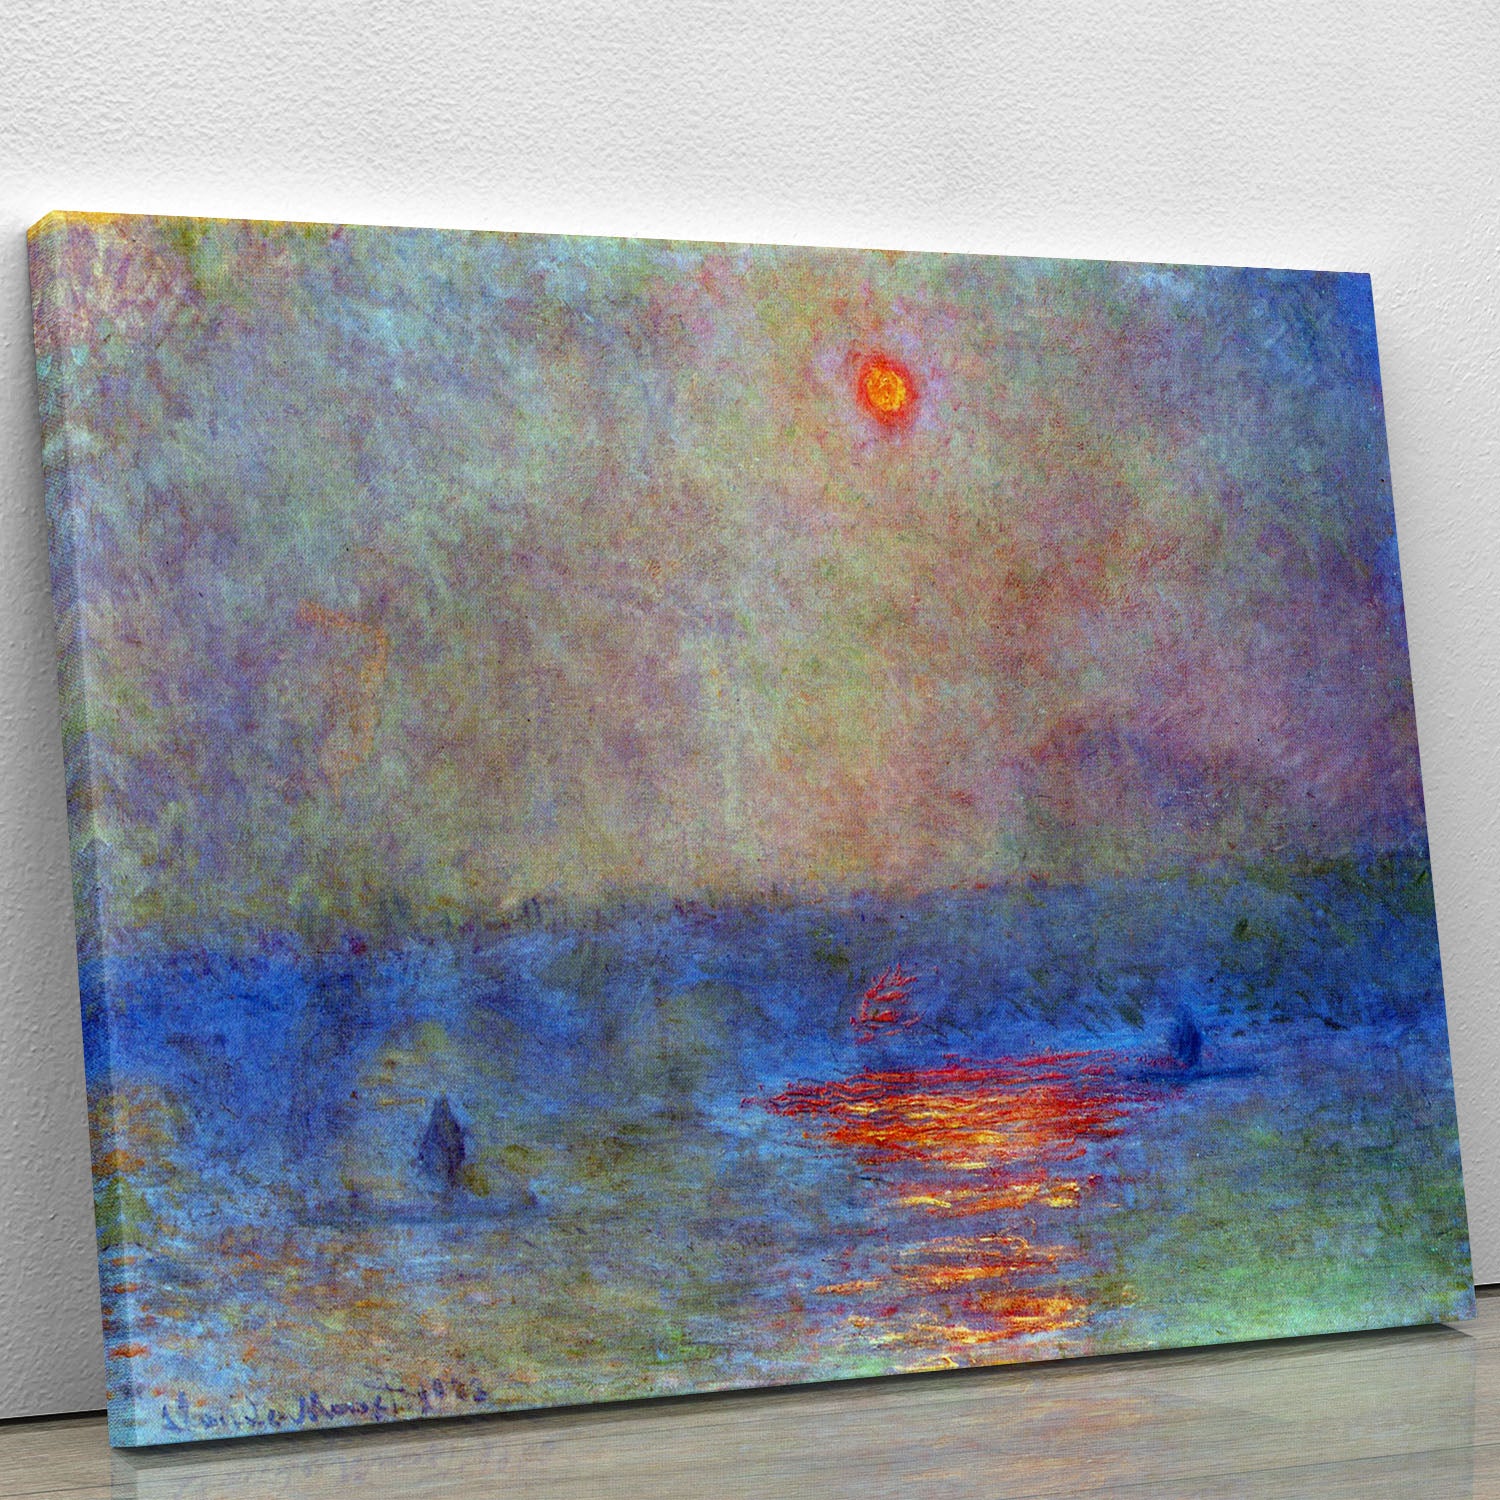 Waterloo Bridge the sun in the fog by Monet Canvas Print or Poster - Canvas Art Rocks - 1